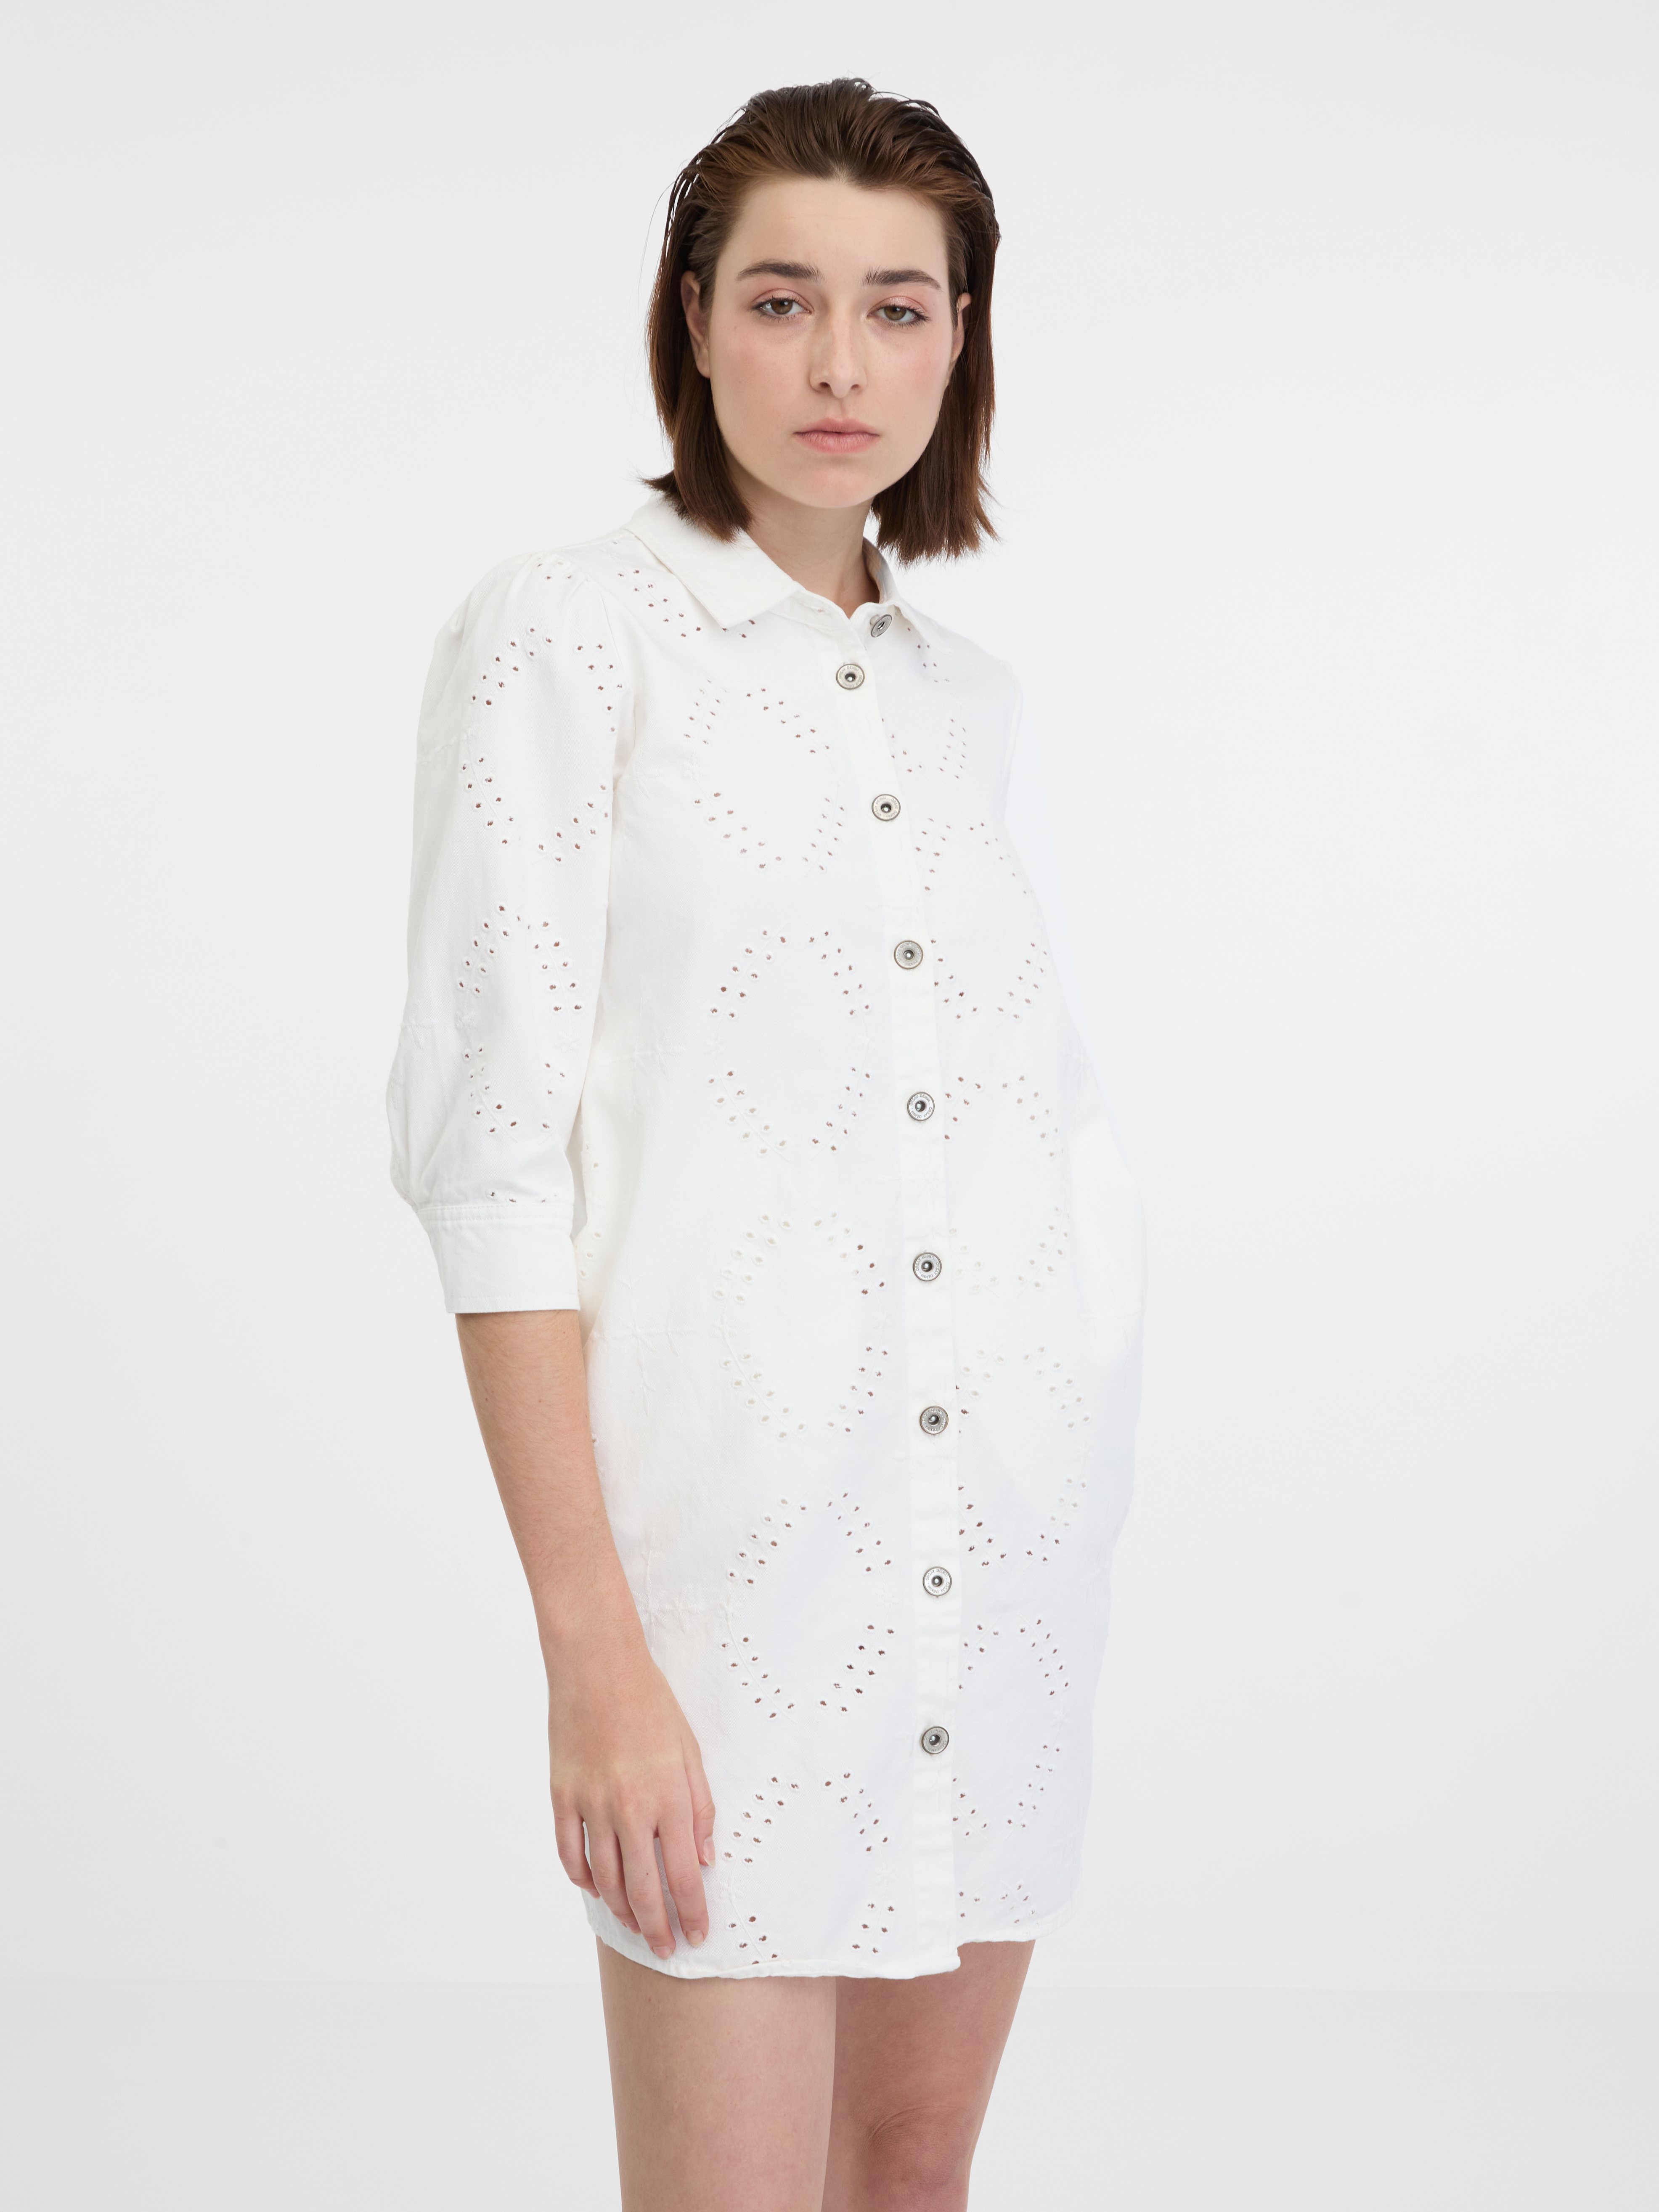 Orsay White Denim Shirt Dress - Women Na razprodaji-orsay 1